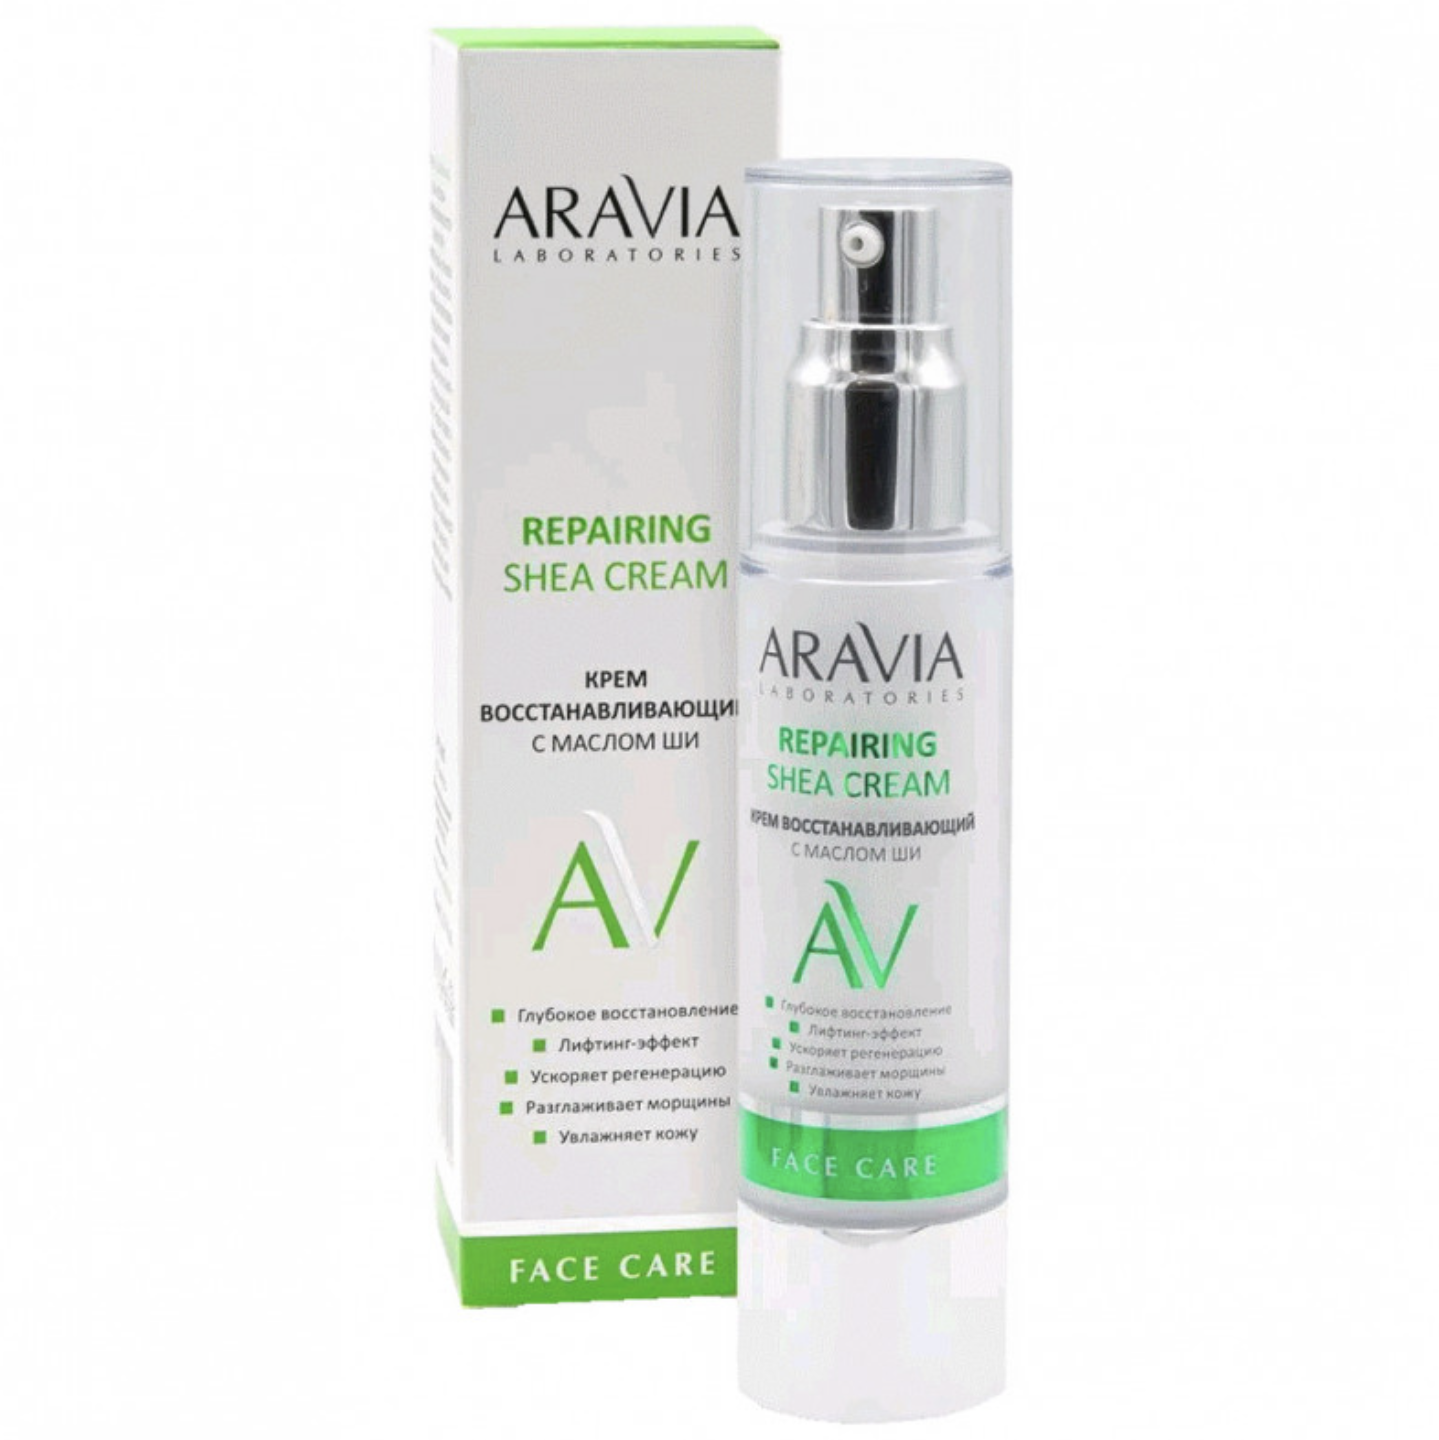   / Aravia Laboratories     Repairing Shea Cream    50 